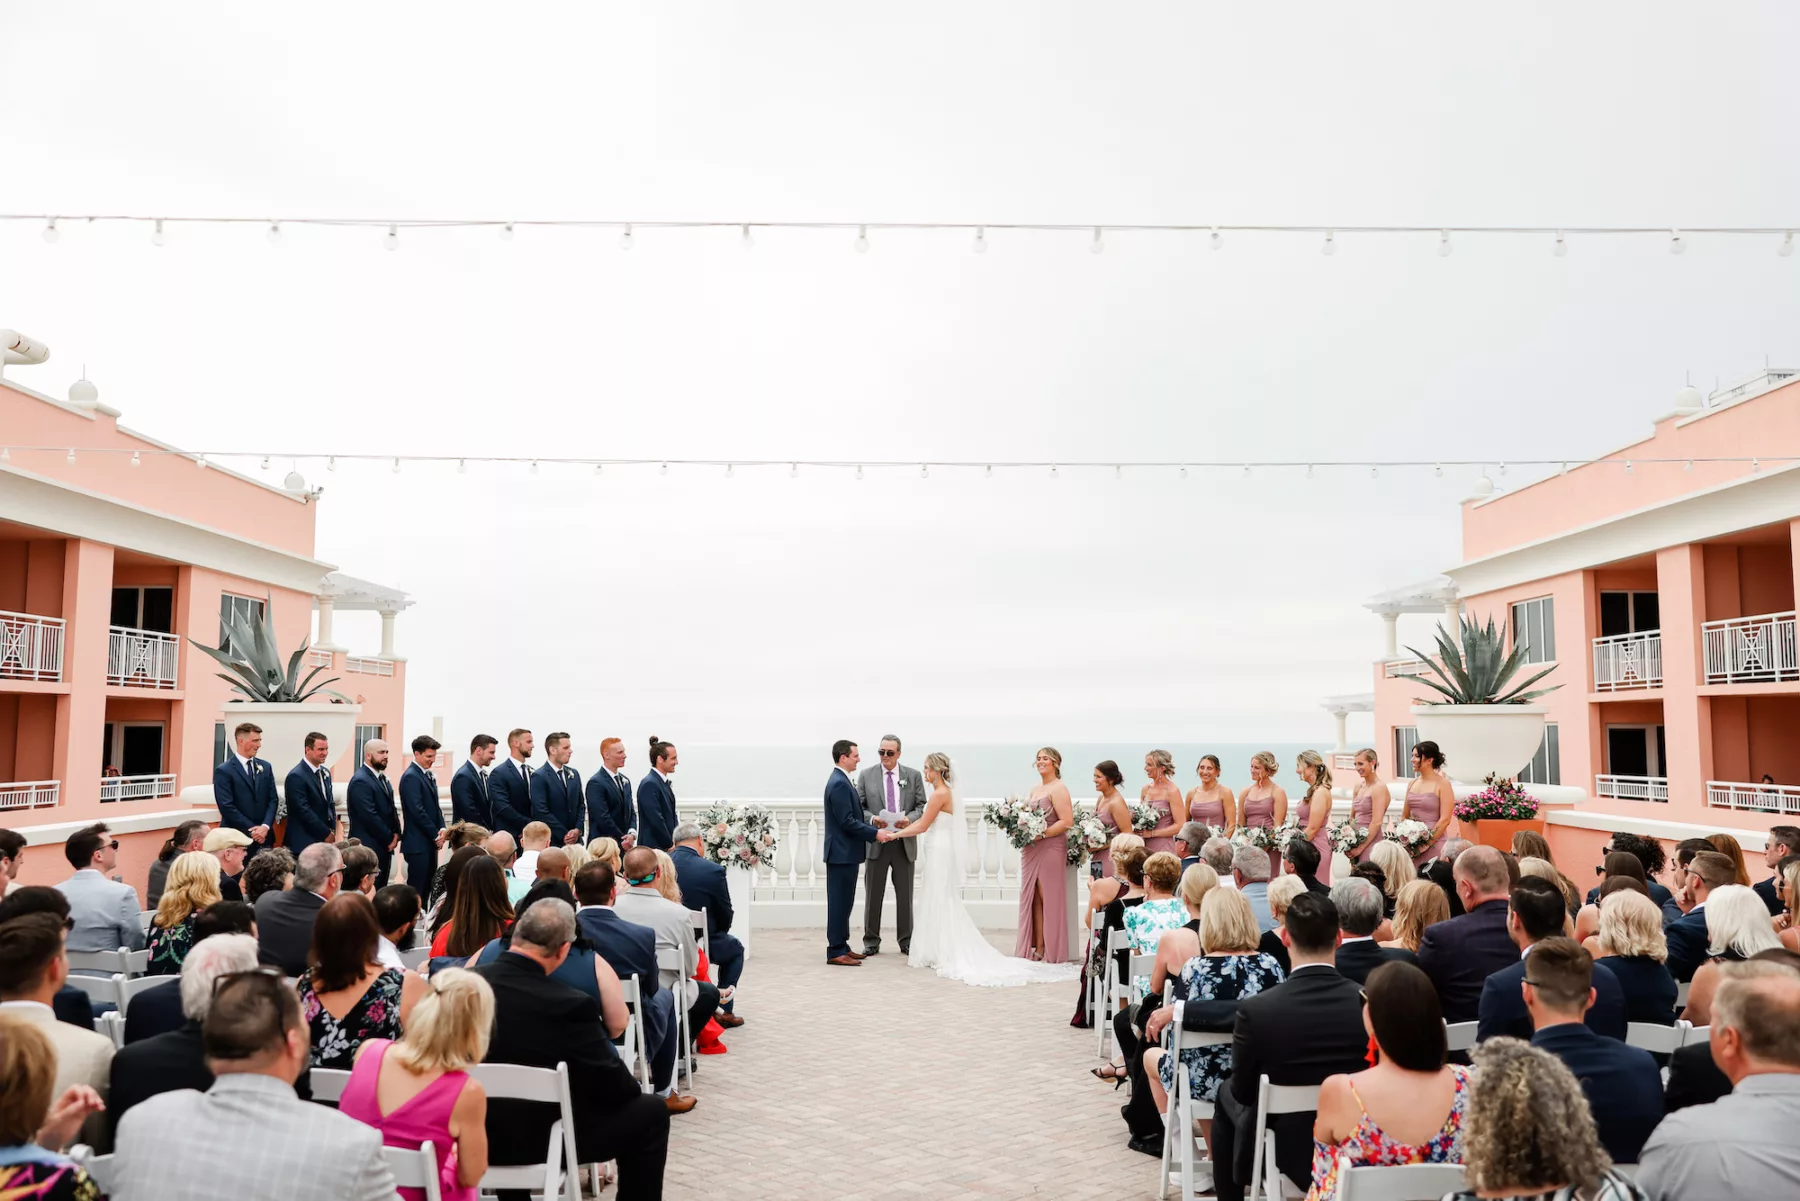 Sky Terrance Wedding Ceremony Inspiration | Tampa Bay Event Venue Hyatt Regency Clearwater Beach | Photographer Lifelong Photography Studio